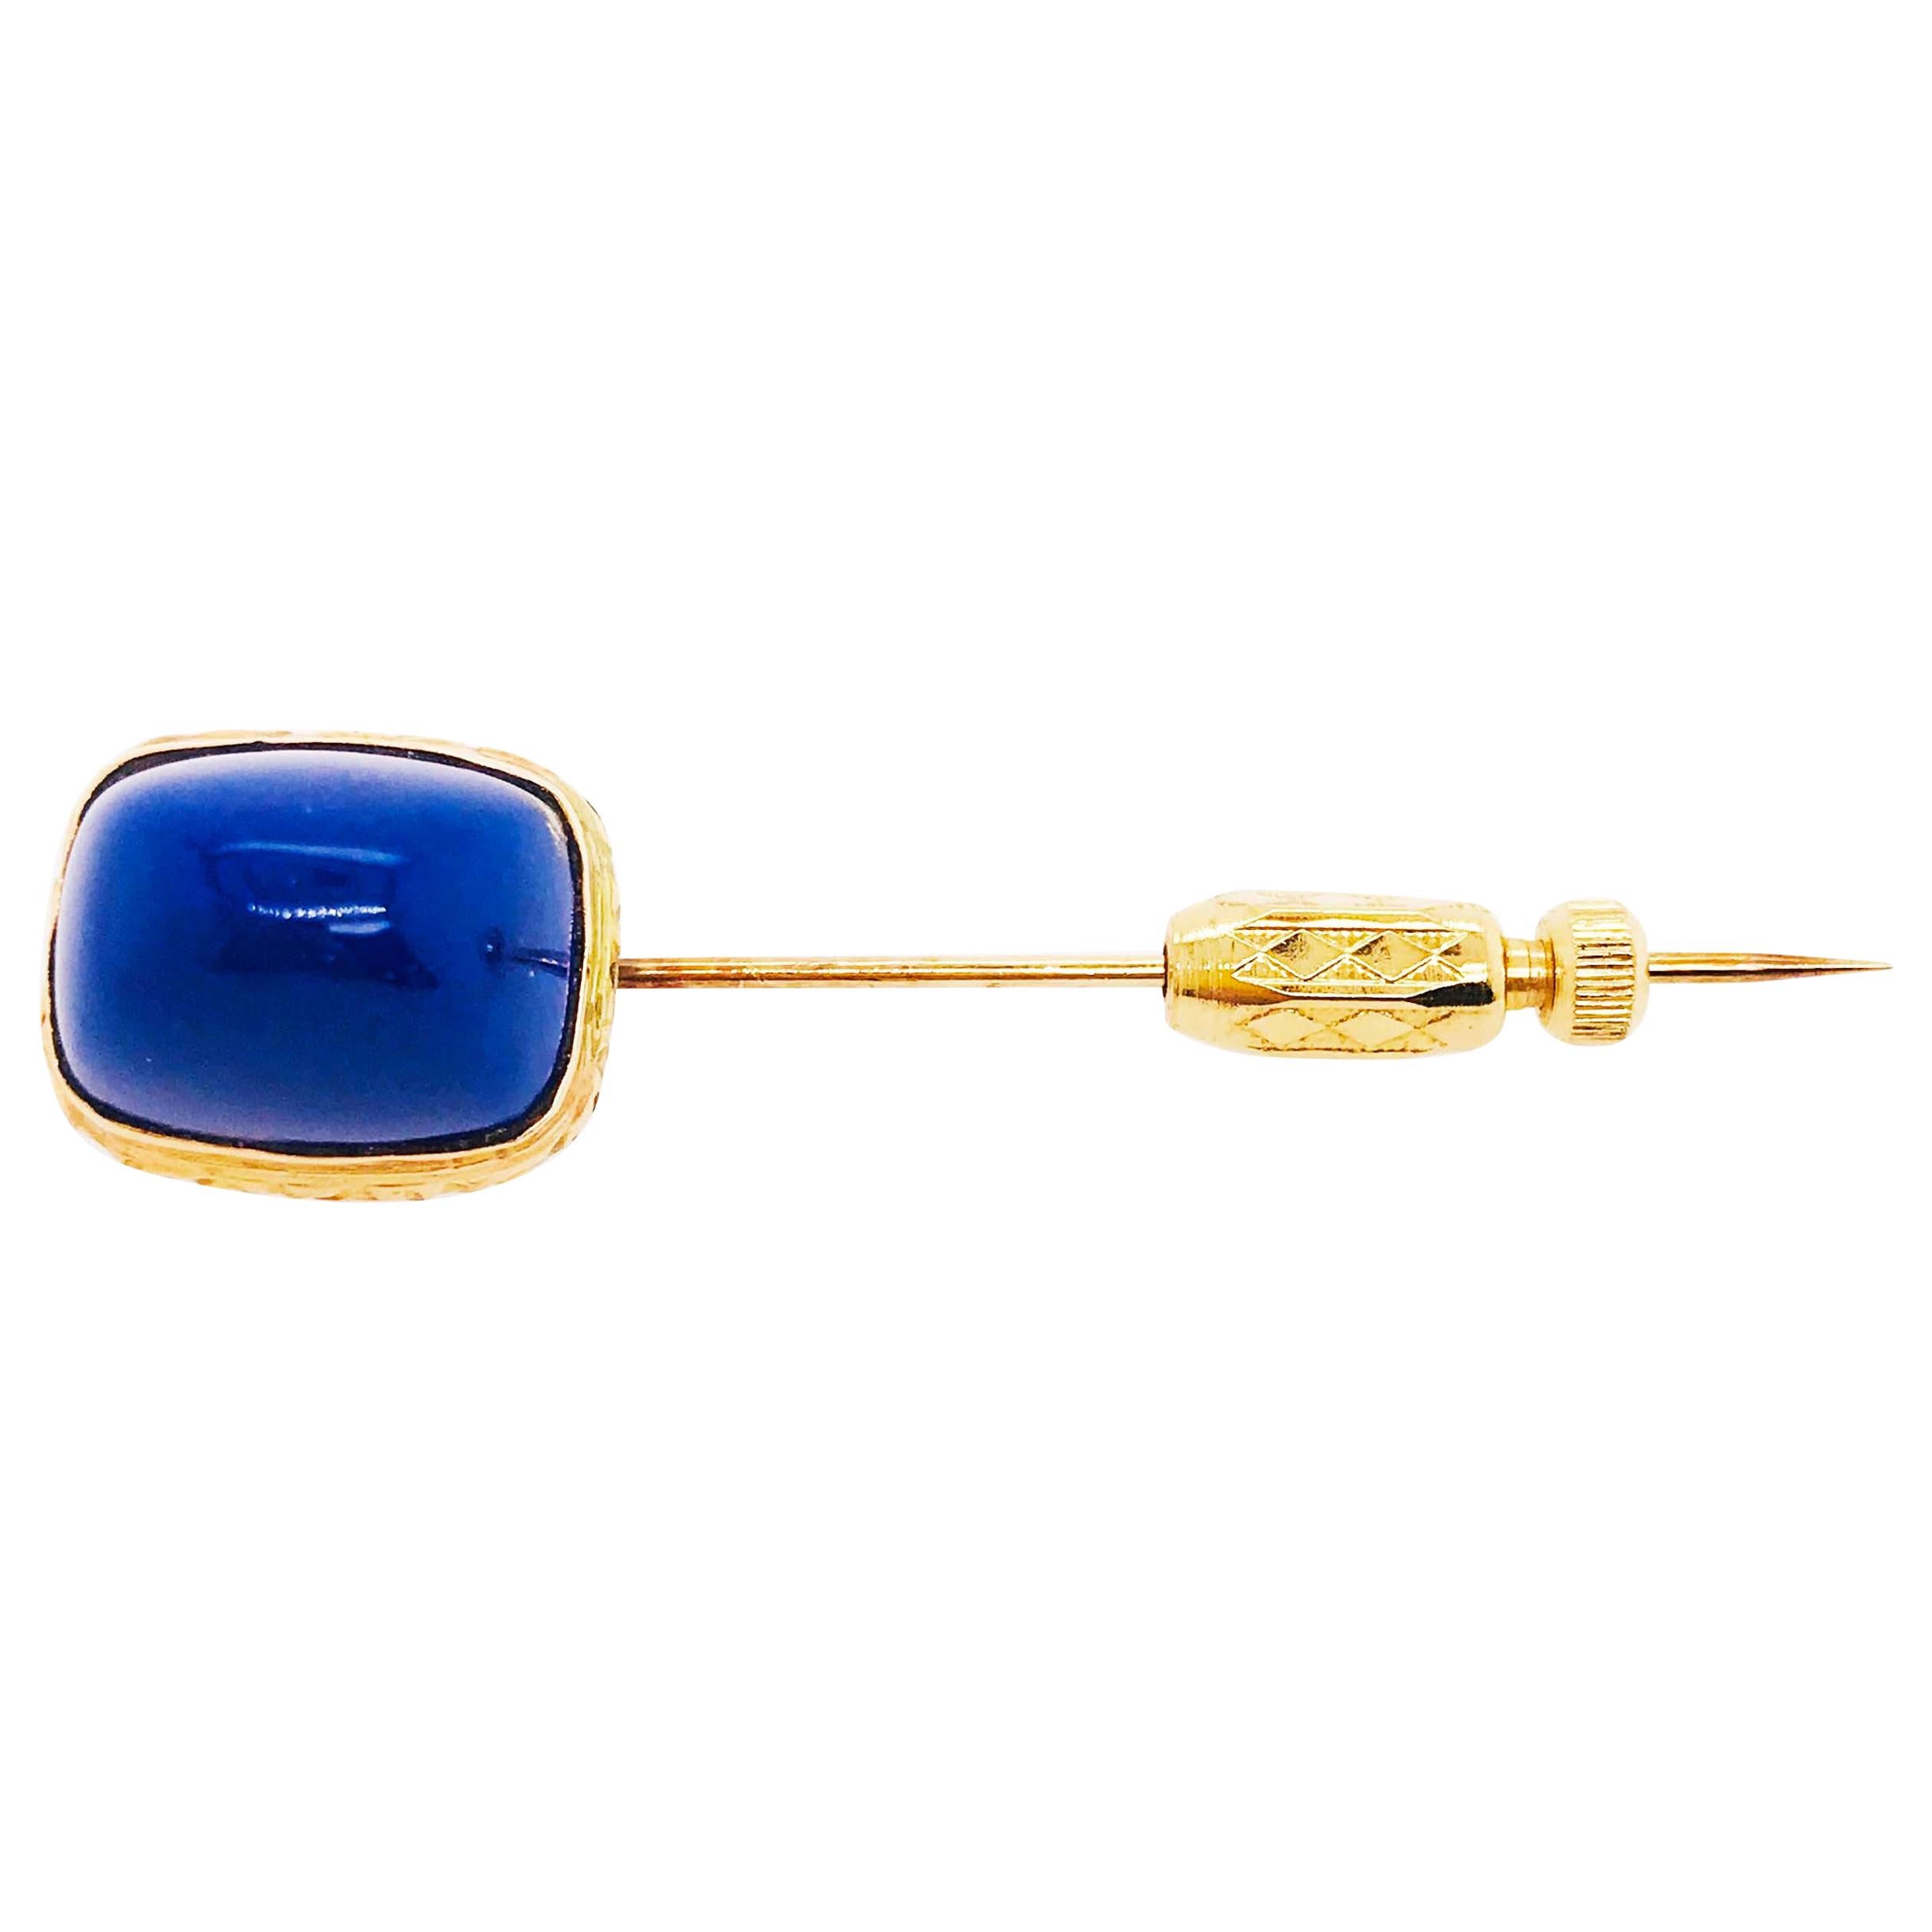 Blue Lapis Brooch, Gemstone Cabochon Handmade Brooch/Pin in 18 Karat Yellow Gold